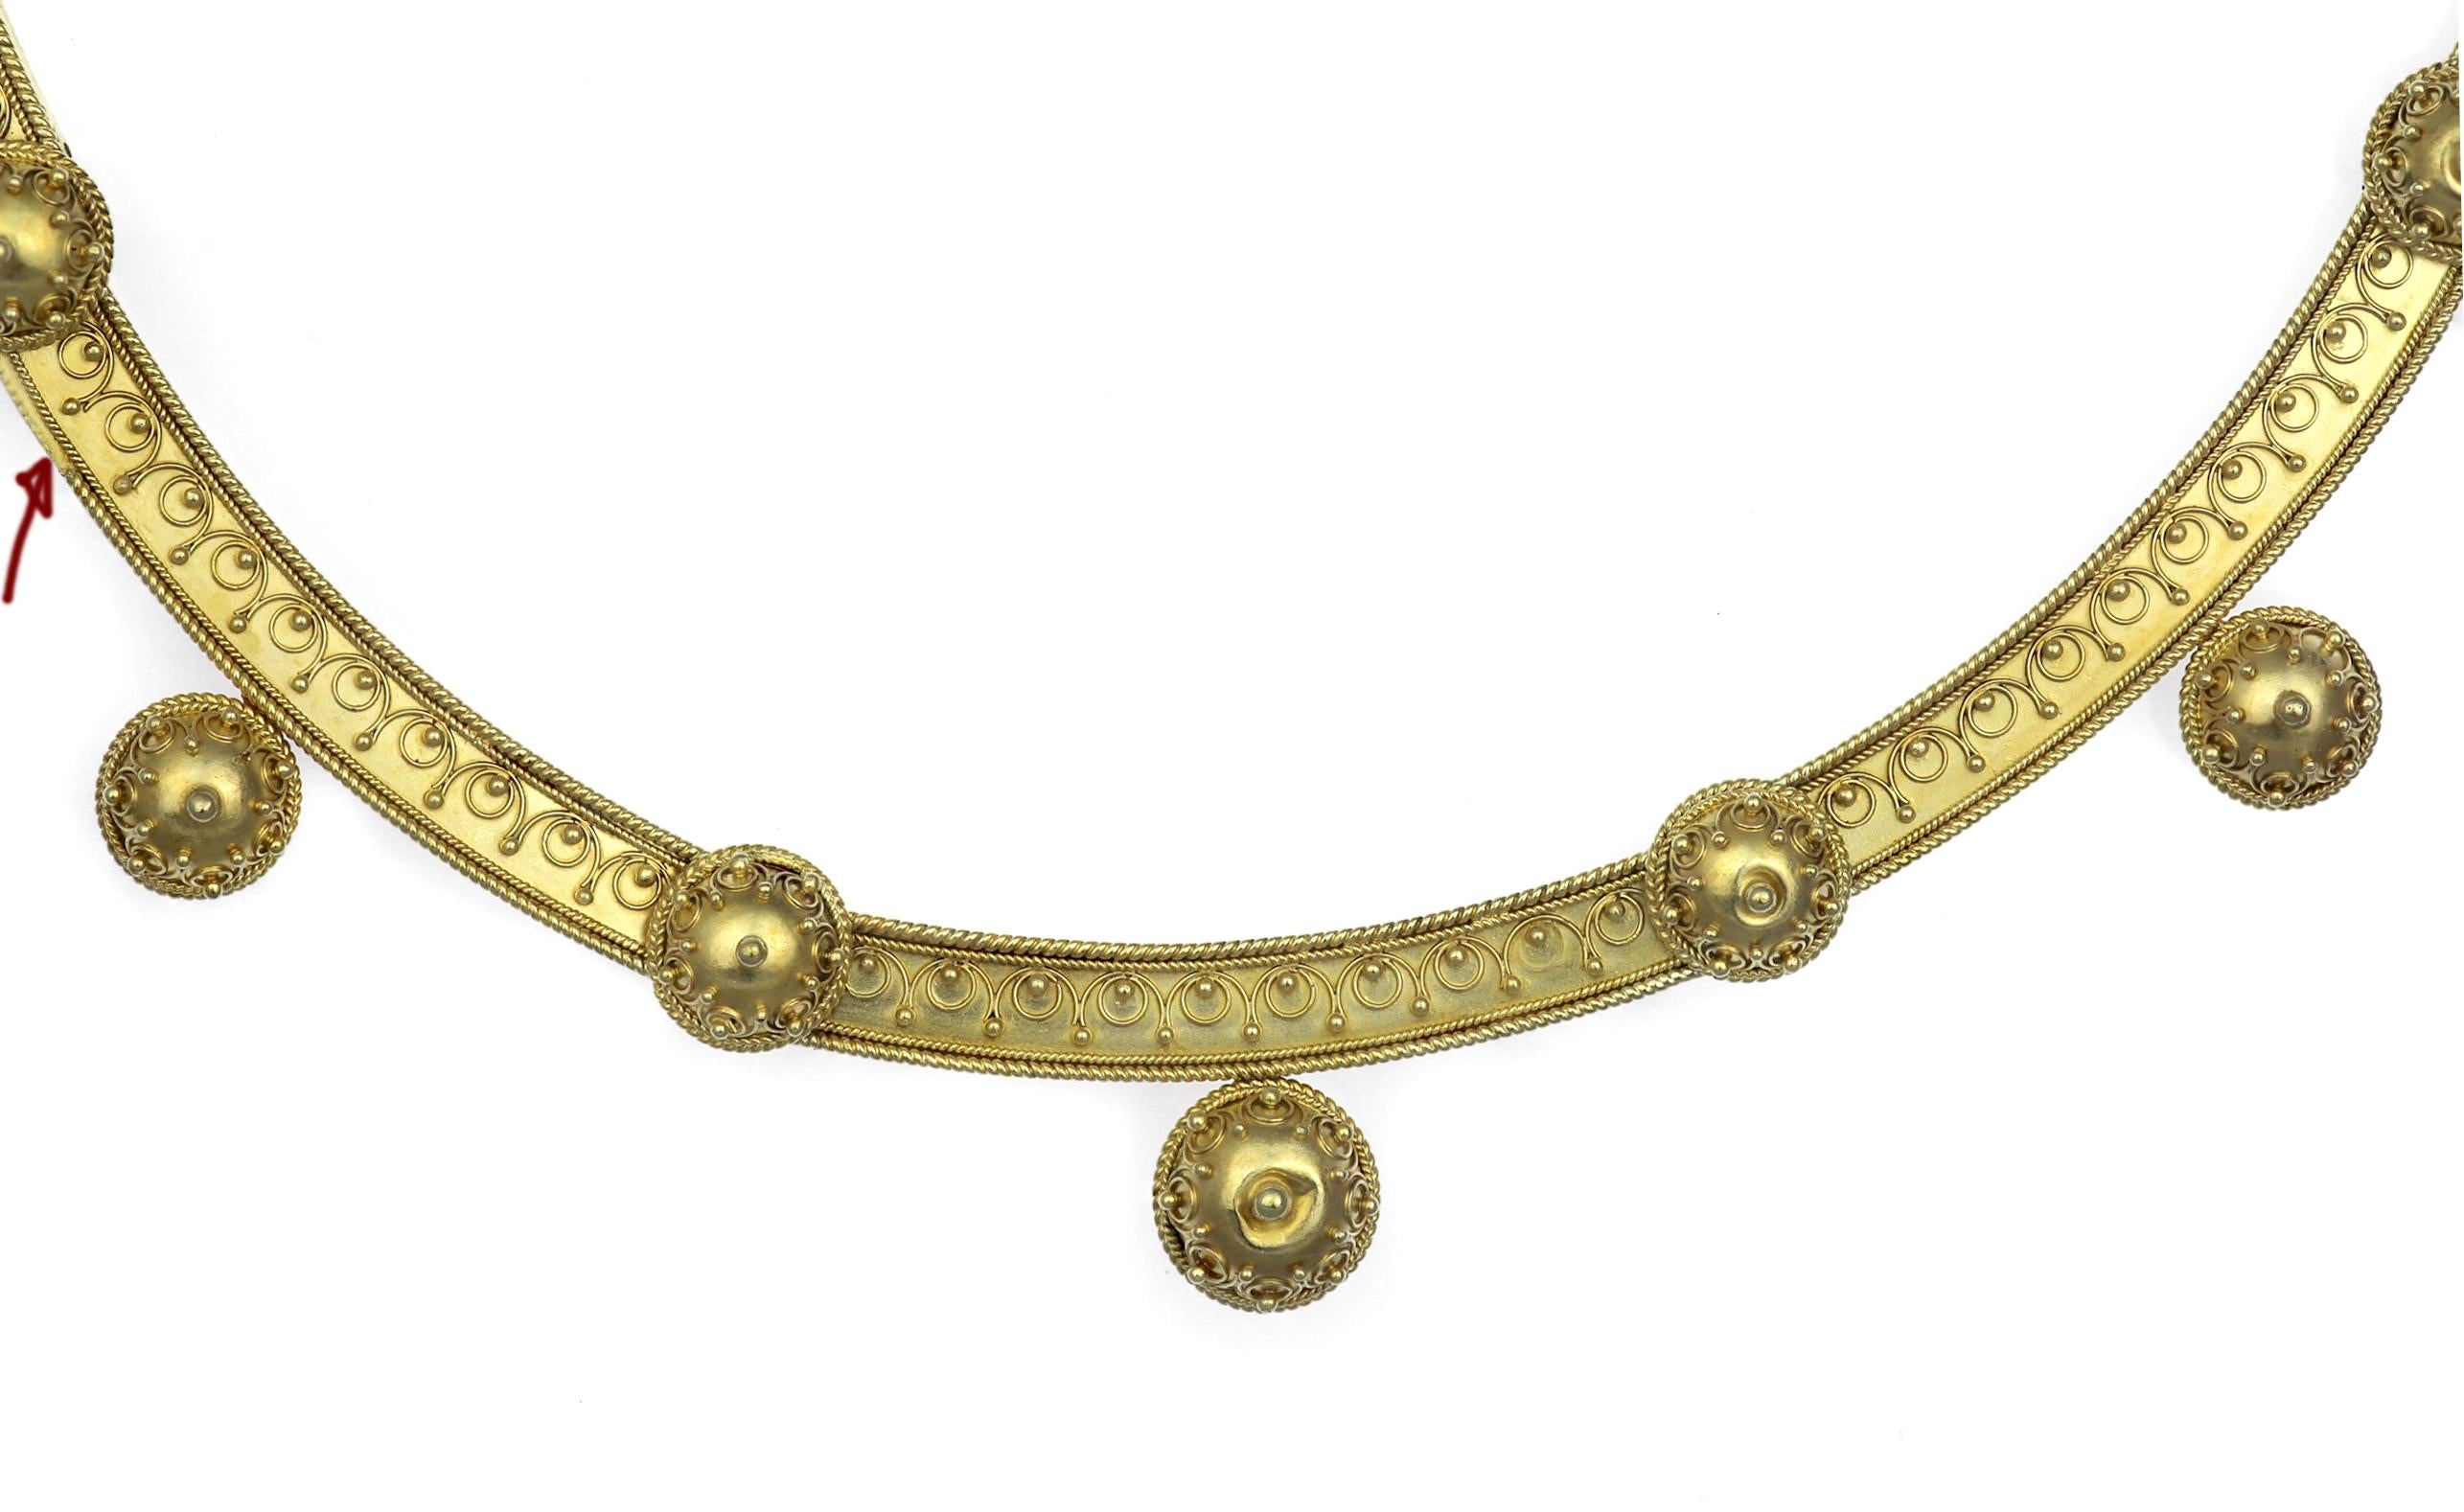 Antique Archaeological Revival 15K Gold Necklace For Sale 6